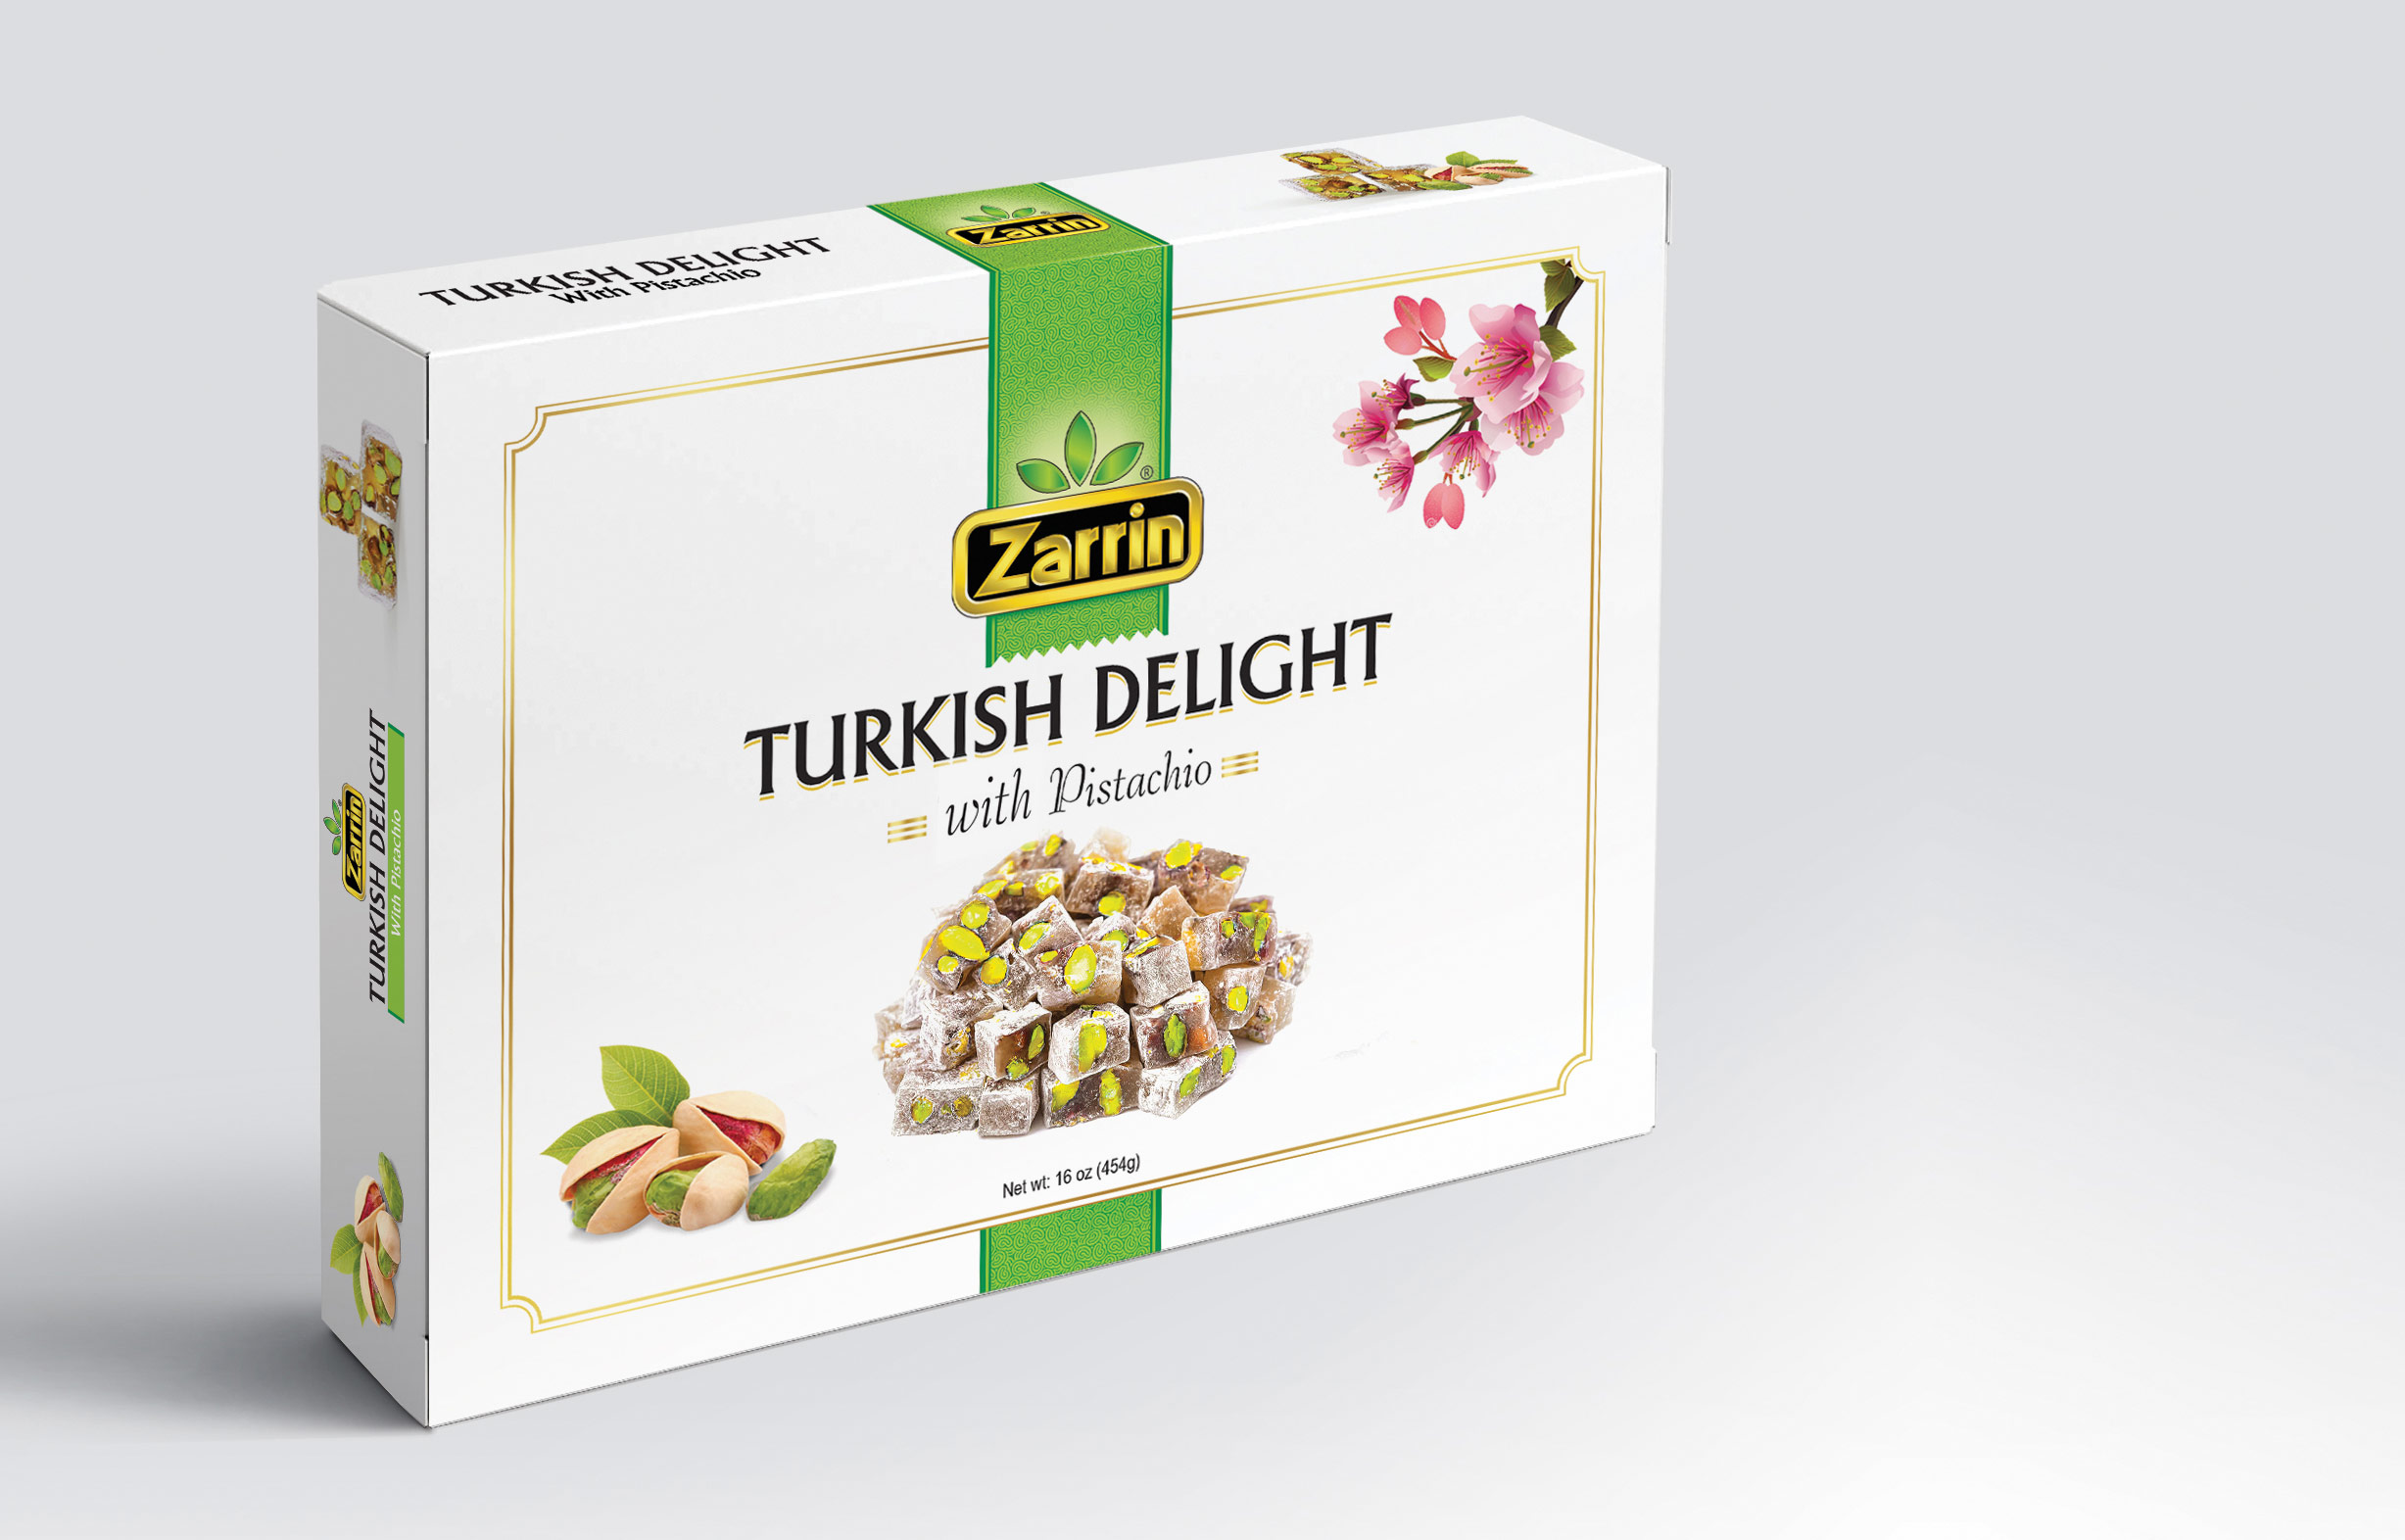 Zarrin Turkish Delight With Pistachio in 16oz box.